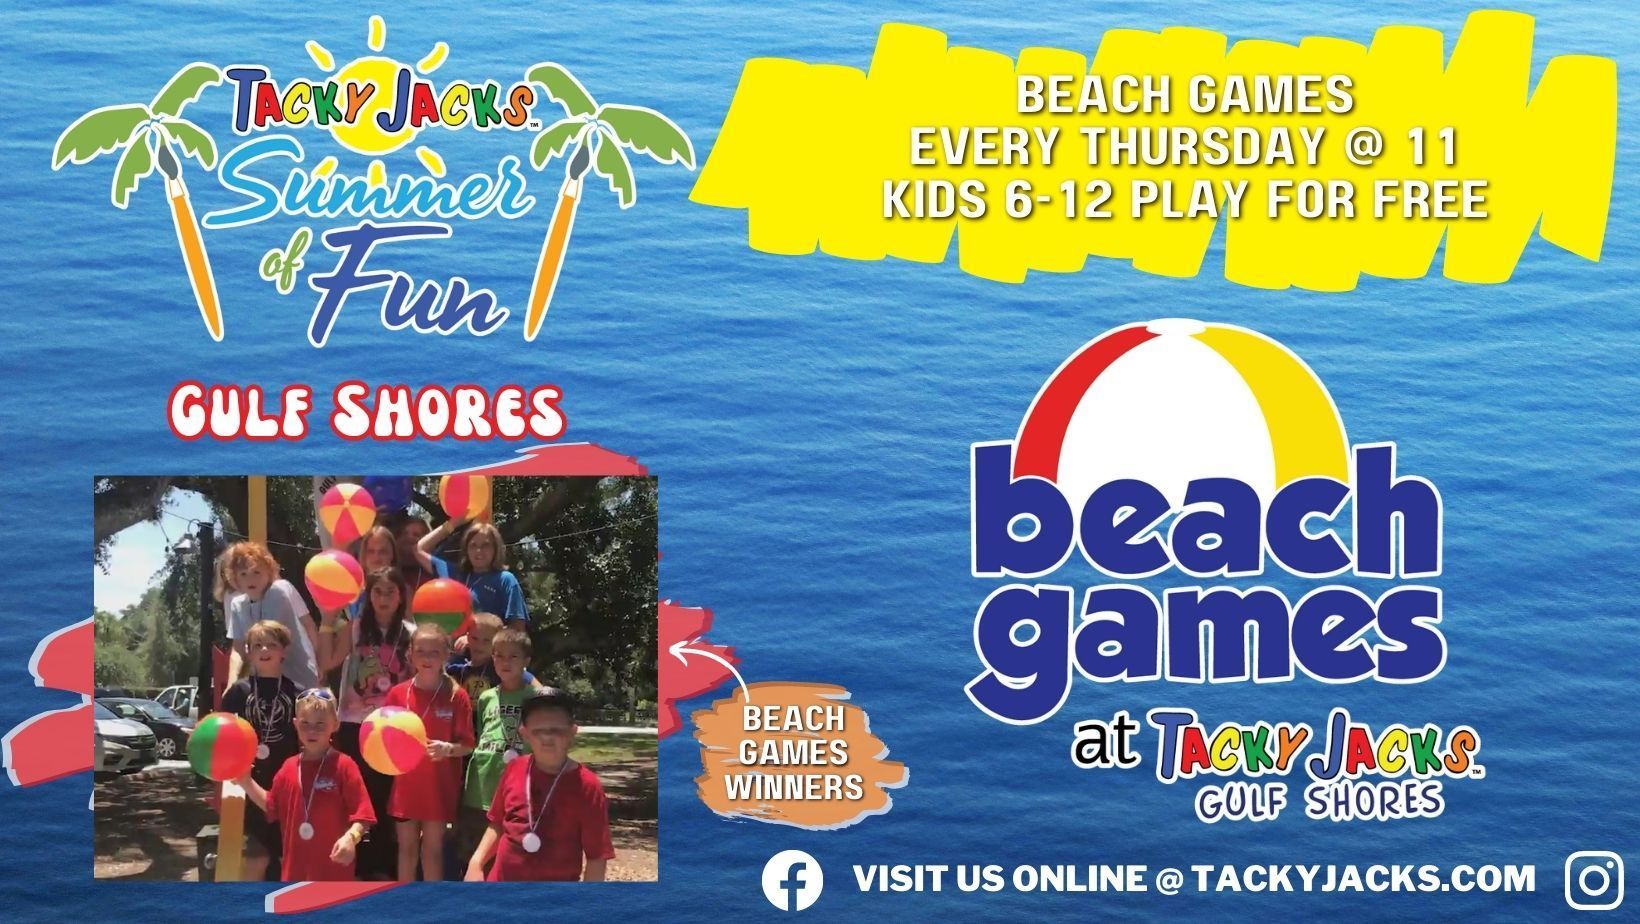 Beach Games on Thursday at Tacky Jacks Summer of Fun